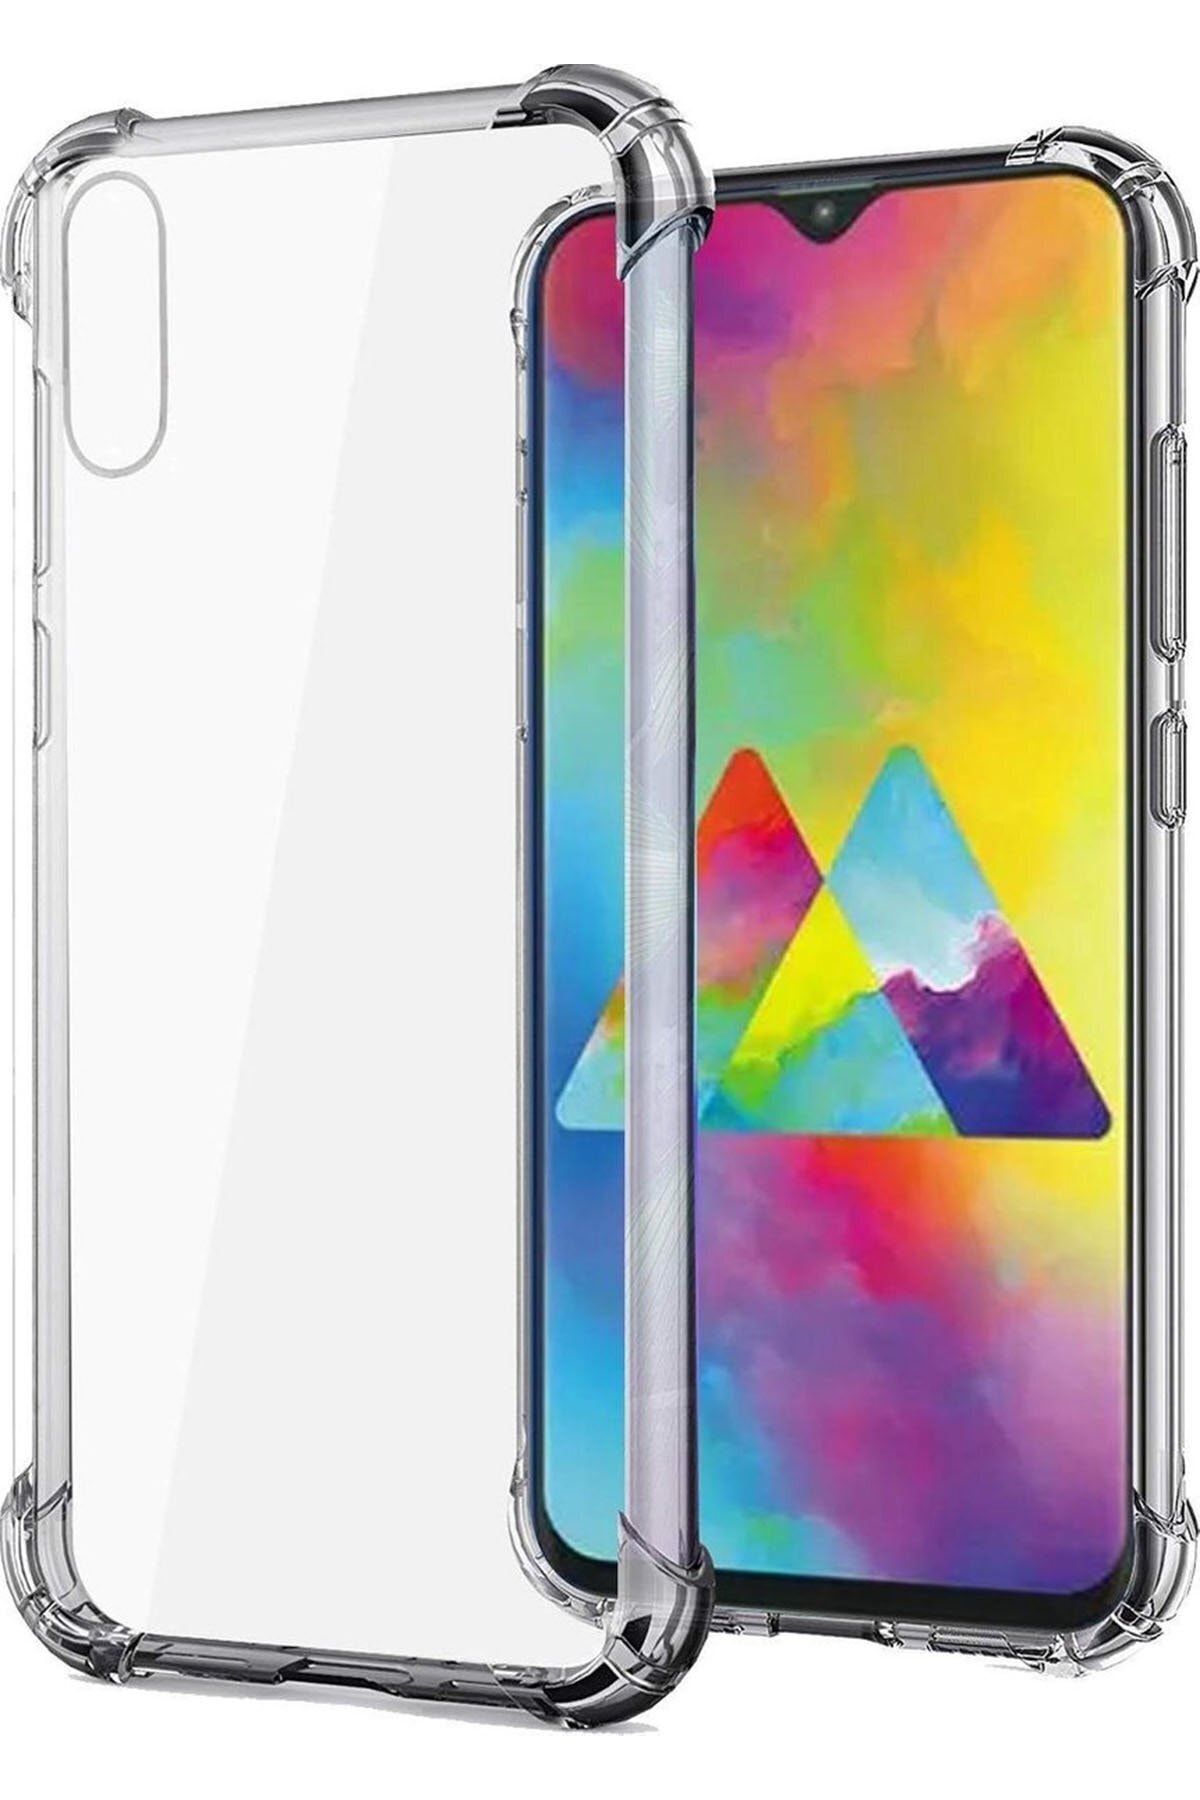 Samsung Ankacep Galaxy A50 Kılıf Olex Tpu Silikon